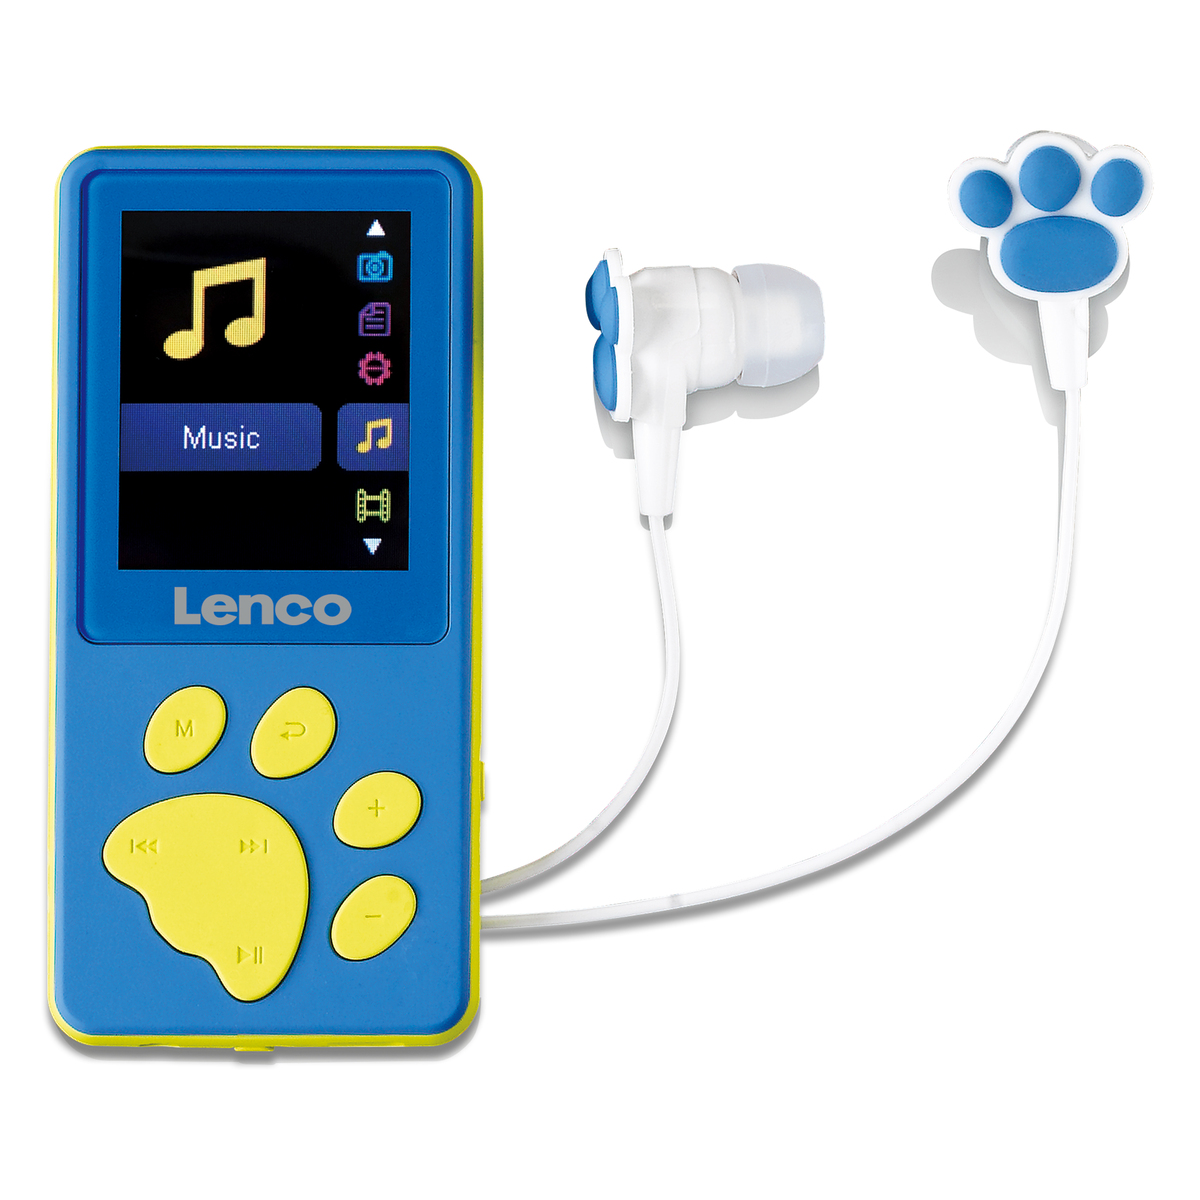 LENCO 8GB MP3, MP4 player mit 1,8" Display